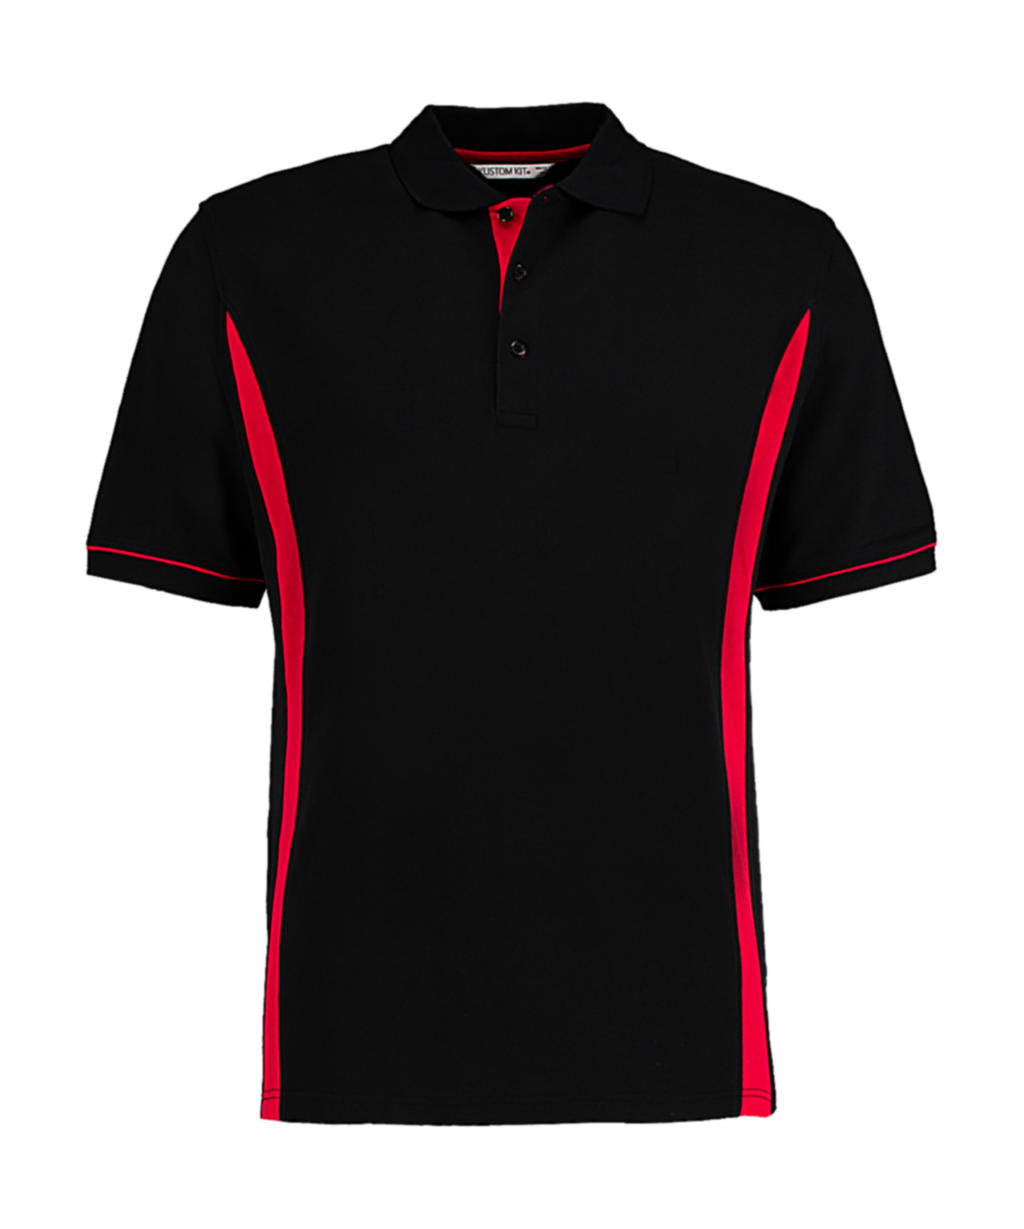  Scottsdale Polo in Farbe Black/Red